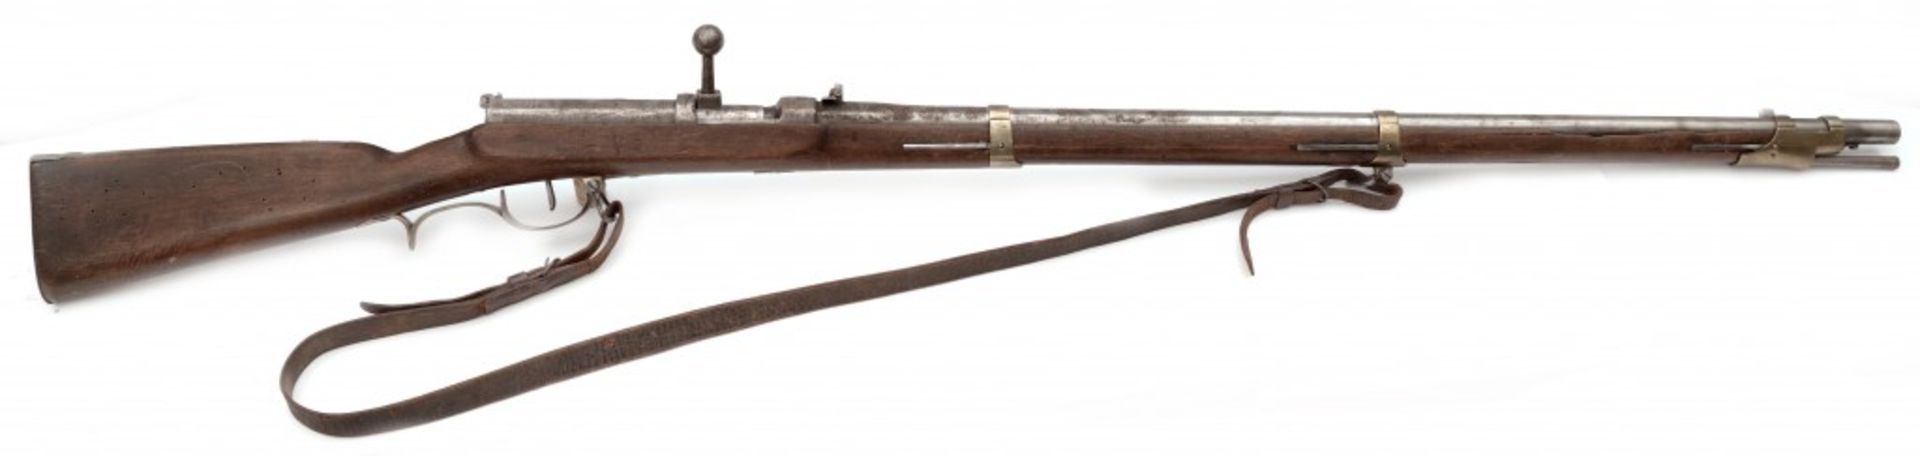 Dreyse Model M/41 Bolt-action Infantry Rifle - Image 6 of 6